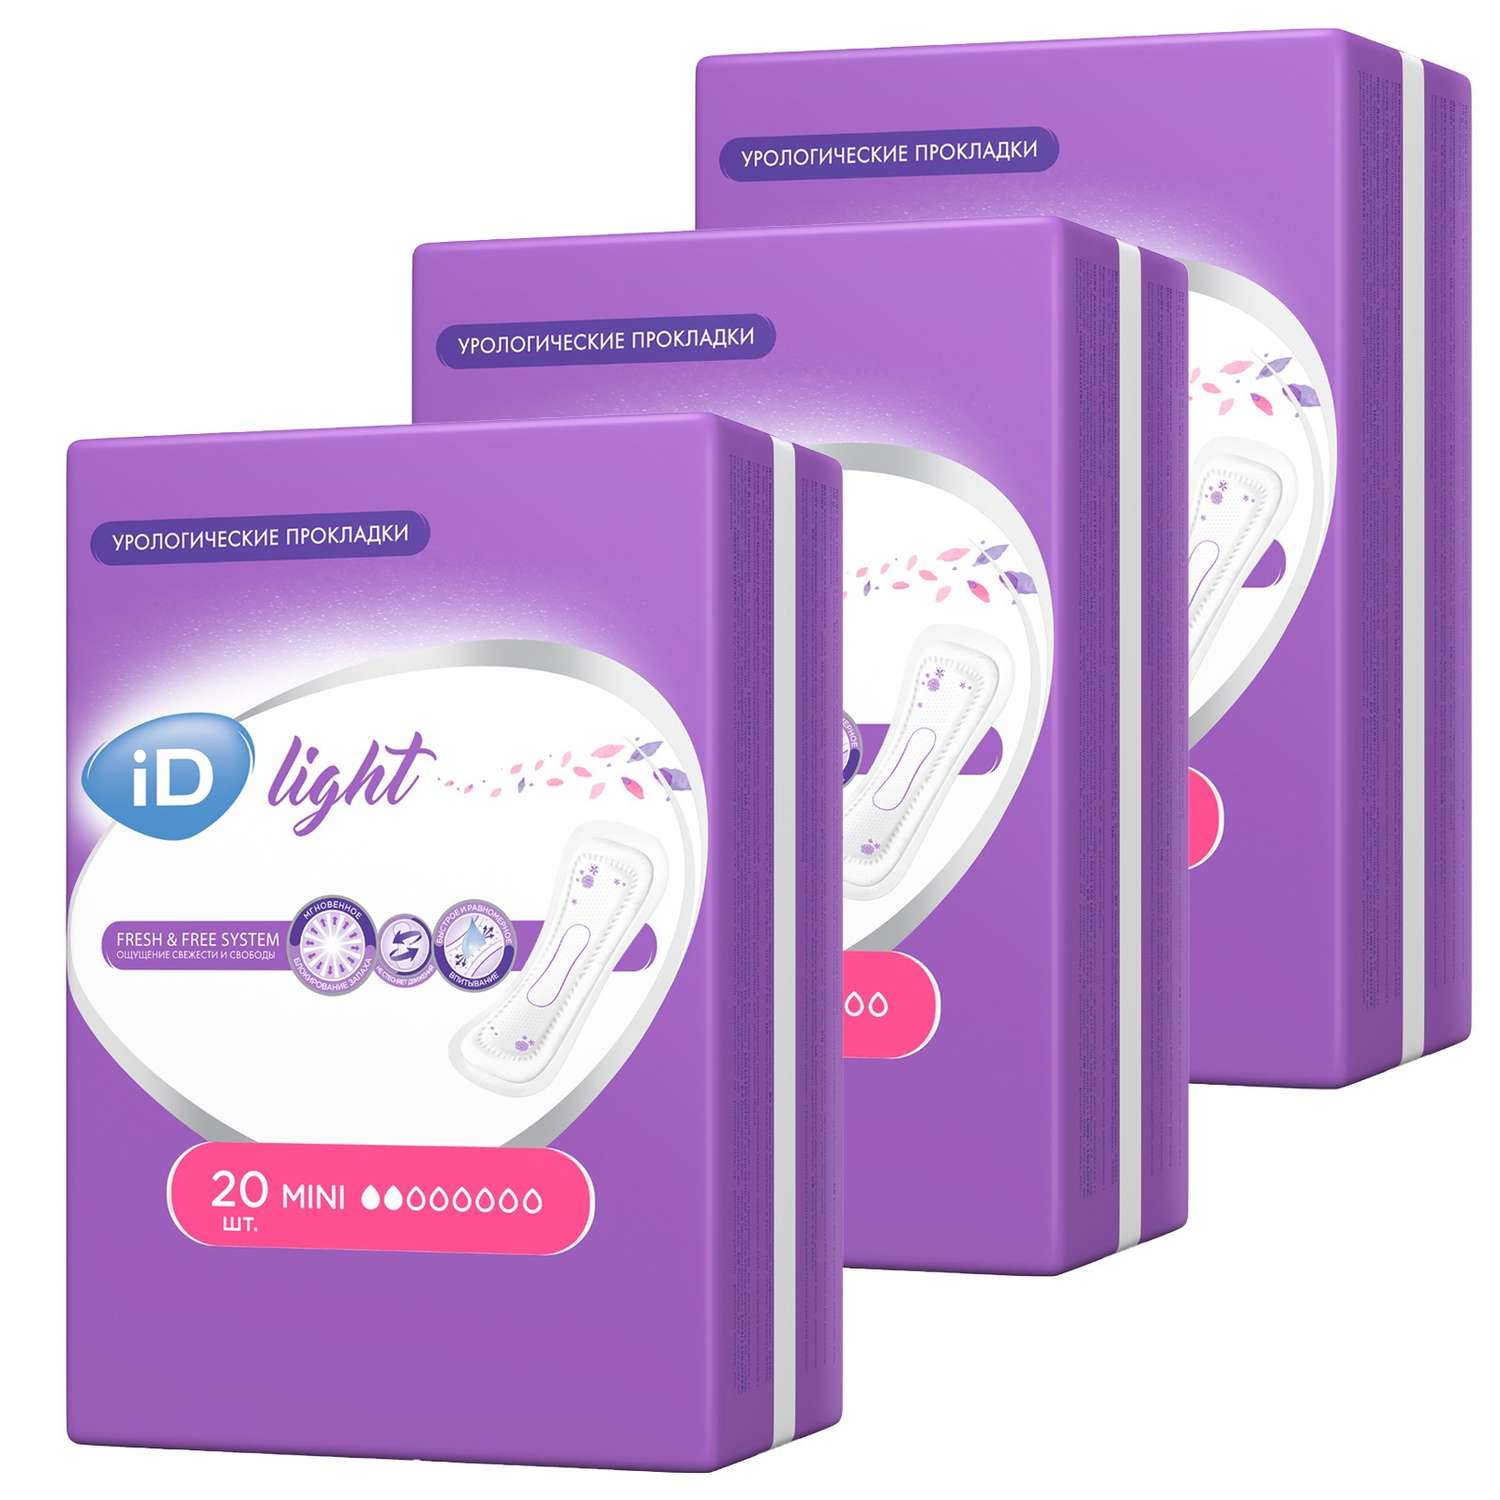 Прокладки урологические iD LIGHT Mini 20 шт. х3 упаковки - фото 2